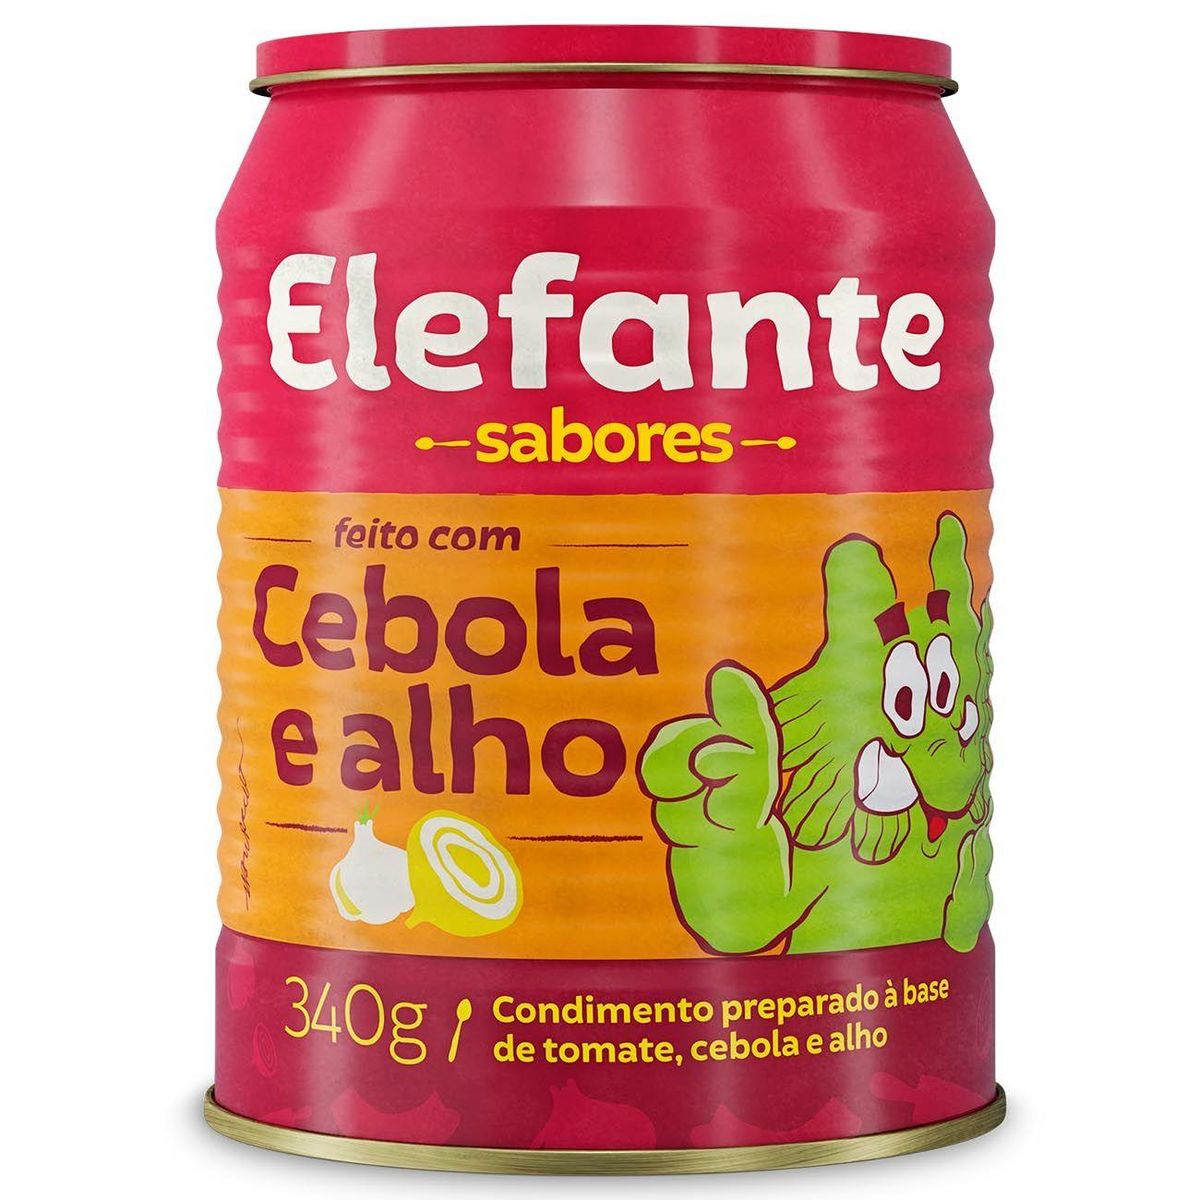 Extrato Tomate  Elefante Ceb&alho Lt 340g